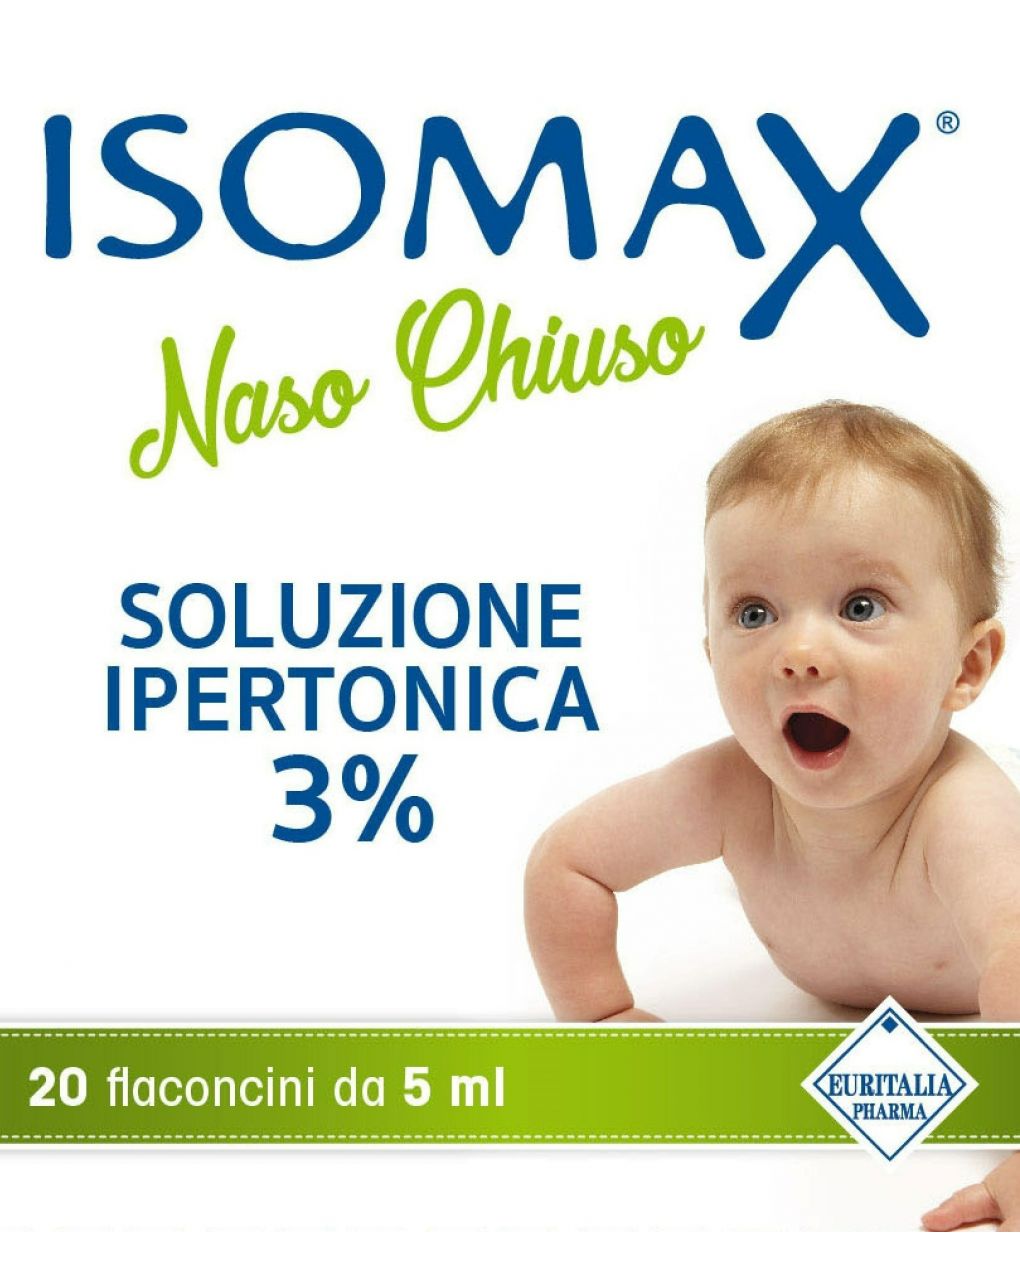 Isomax flaconcini ipertonici 20 fl x 0.5ml - Isomax